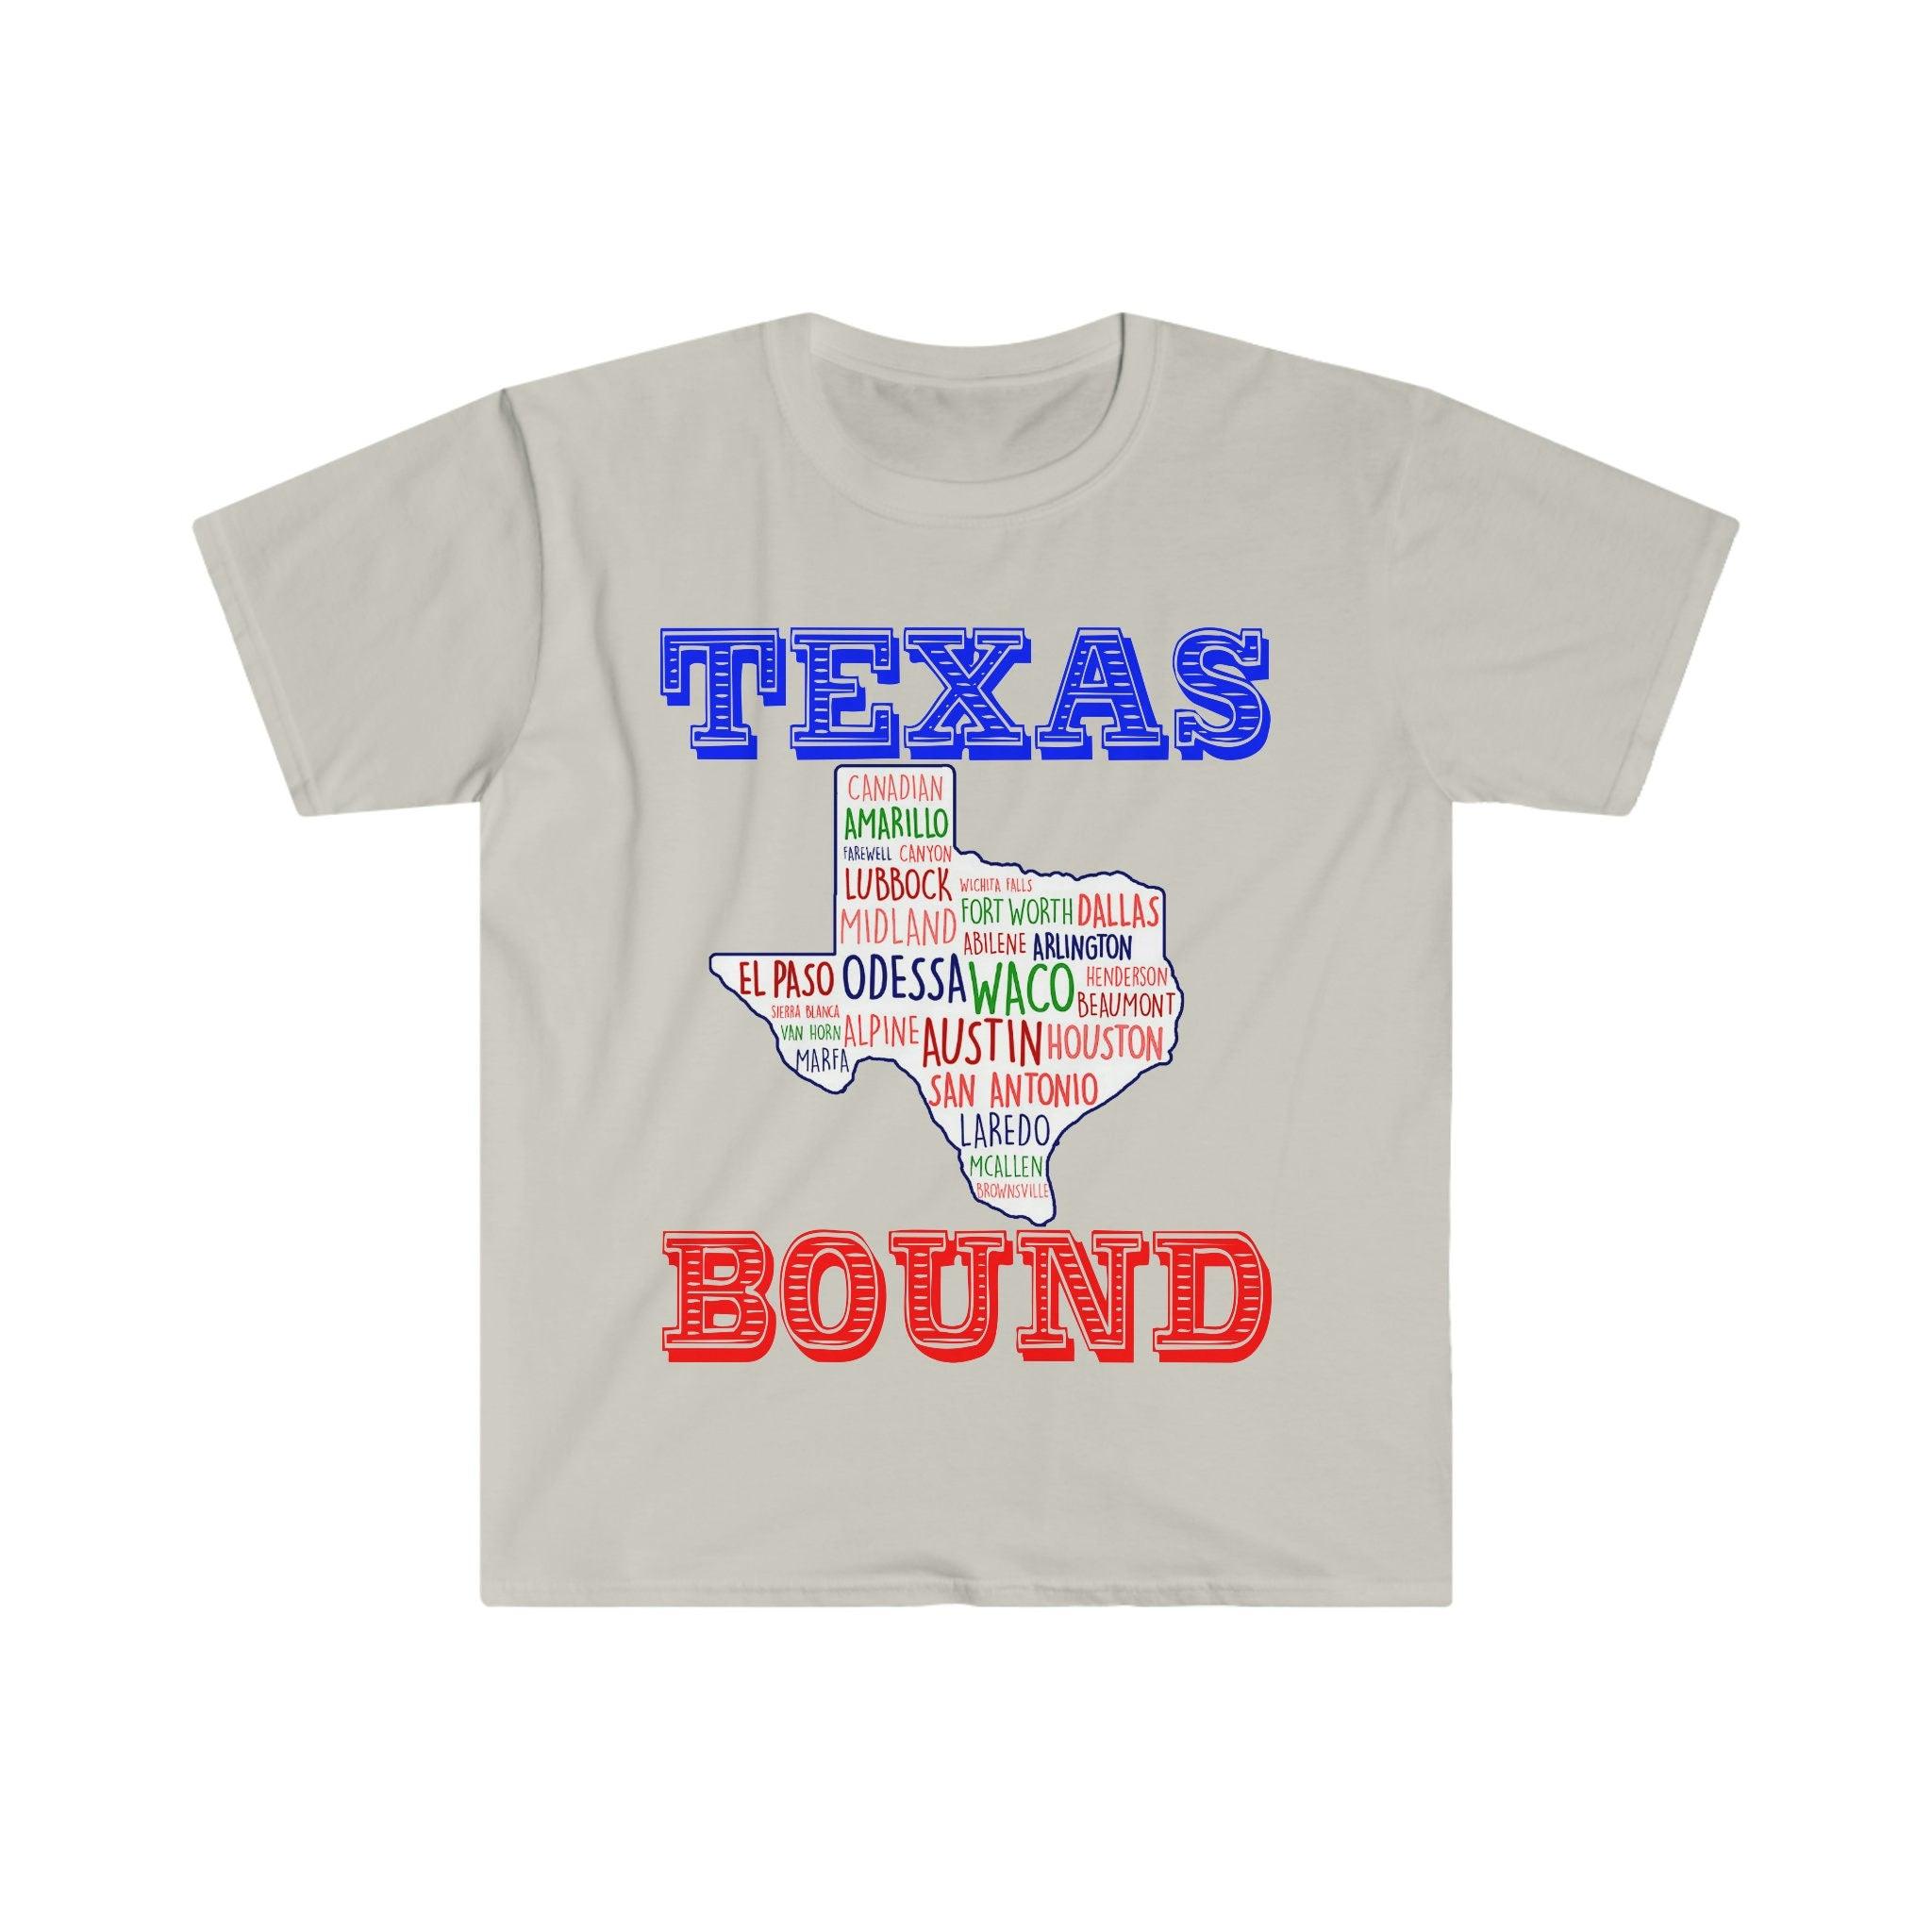 Texas gebunden | Texas Places T-Shirts | Texas Map T-Shirts, Umzug nach Austin, Willkommen in Texas Geschenk, Texas Bound, Neu in Texas, Umzug nach DFW Beat Biden Steuererhöhung, Biden Steuerplan, Küstenliberaler, Houston, Umzug nach Austin, Umzug zu DFW, Umzug nach Texas, Umzug nach Texas Tasse, Neu in Texas, Republikaner, T-Shirt, T-Shirts, Texas gebunden, Texas-Mädchen, Texas-Republikaner in - plusminusco.com